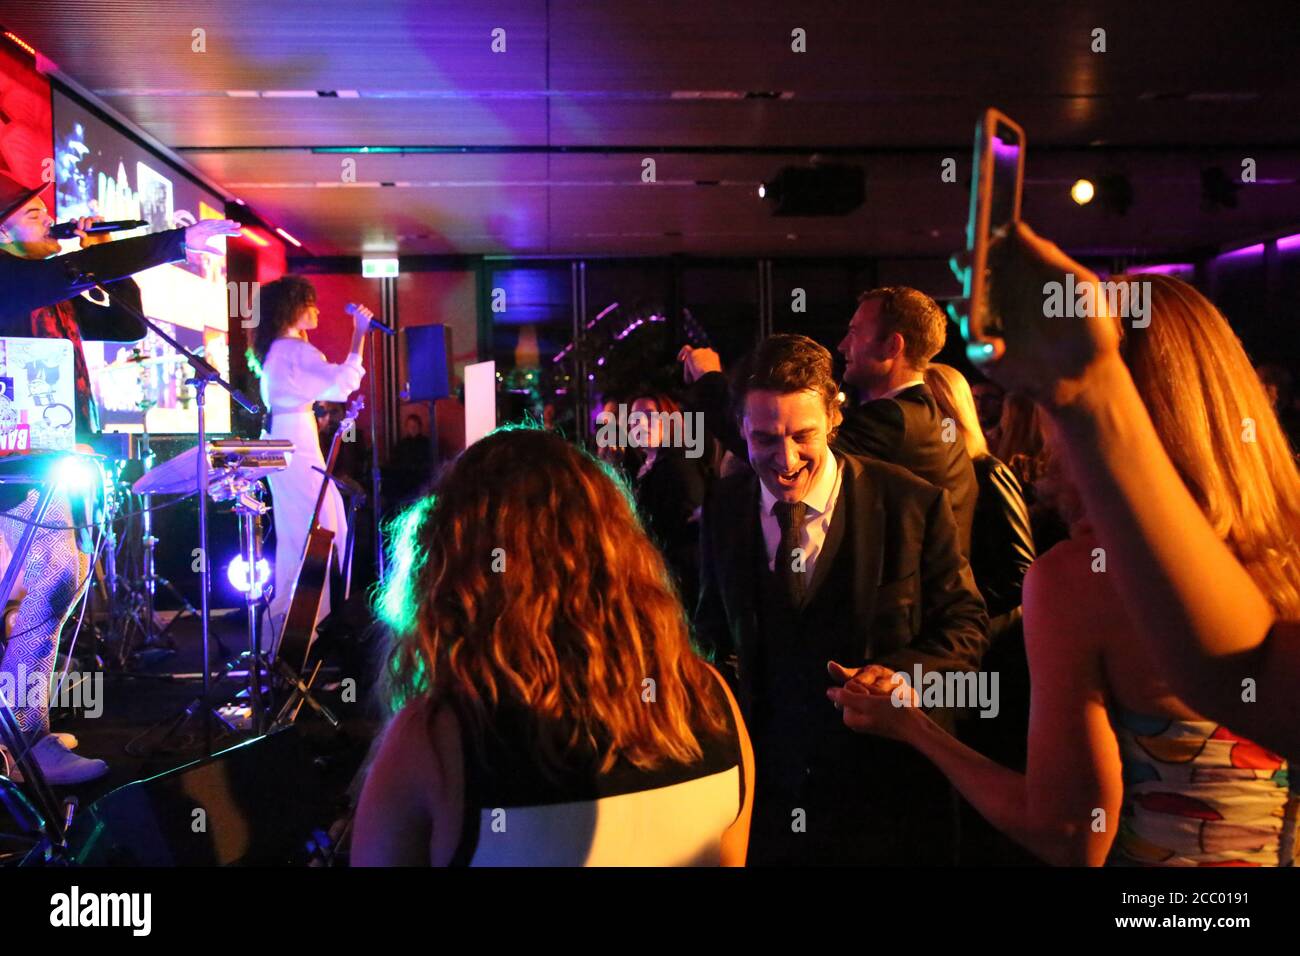 Samuel Johnson (2017 Gold Logie winner) daces to a Guy Sebastian performance at the Sensis x Vivid Sydney CEO Club event. Stock Photo